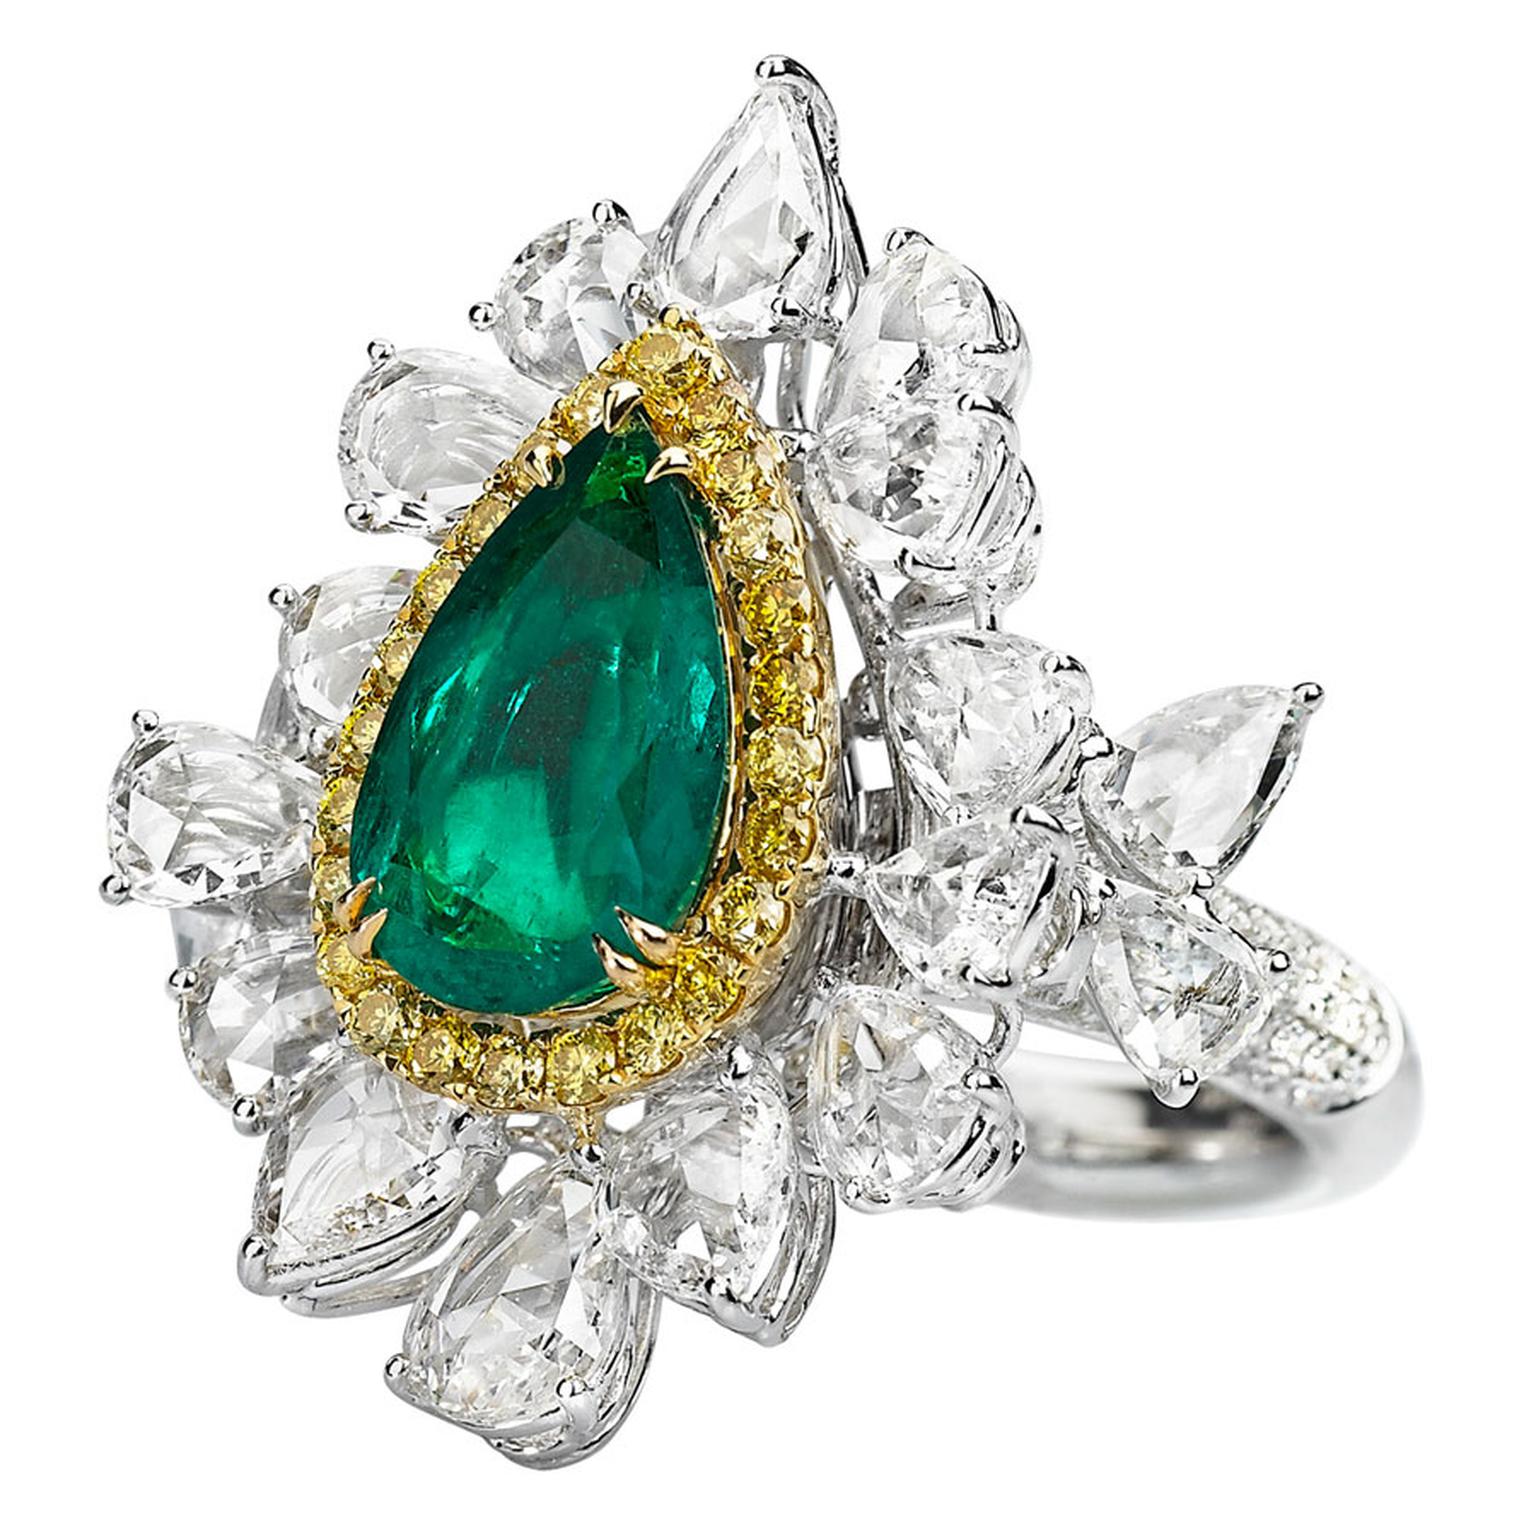 Avakian-diamond-and-emerald-ring.jpg